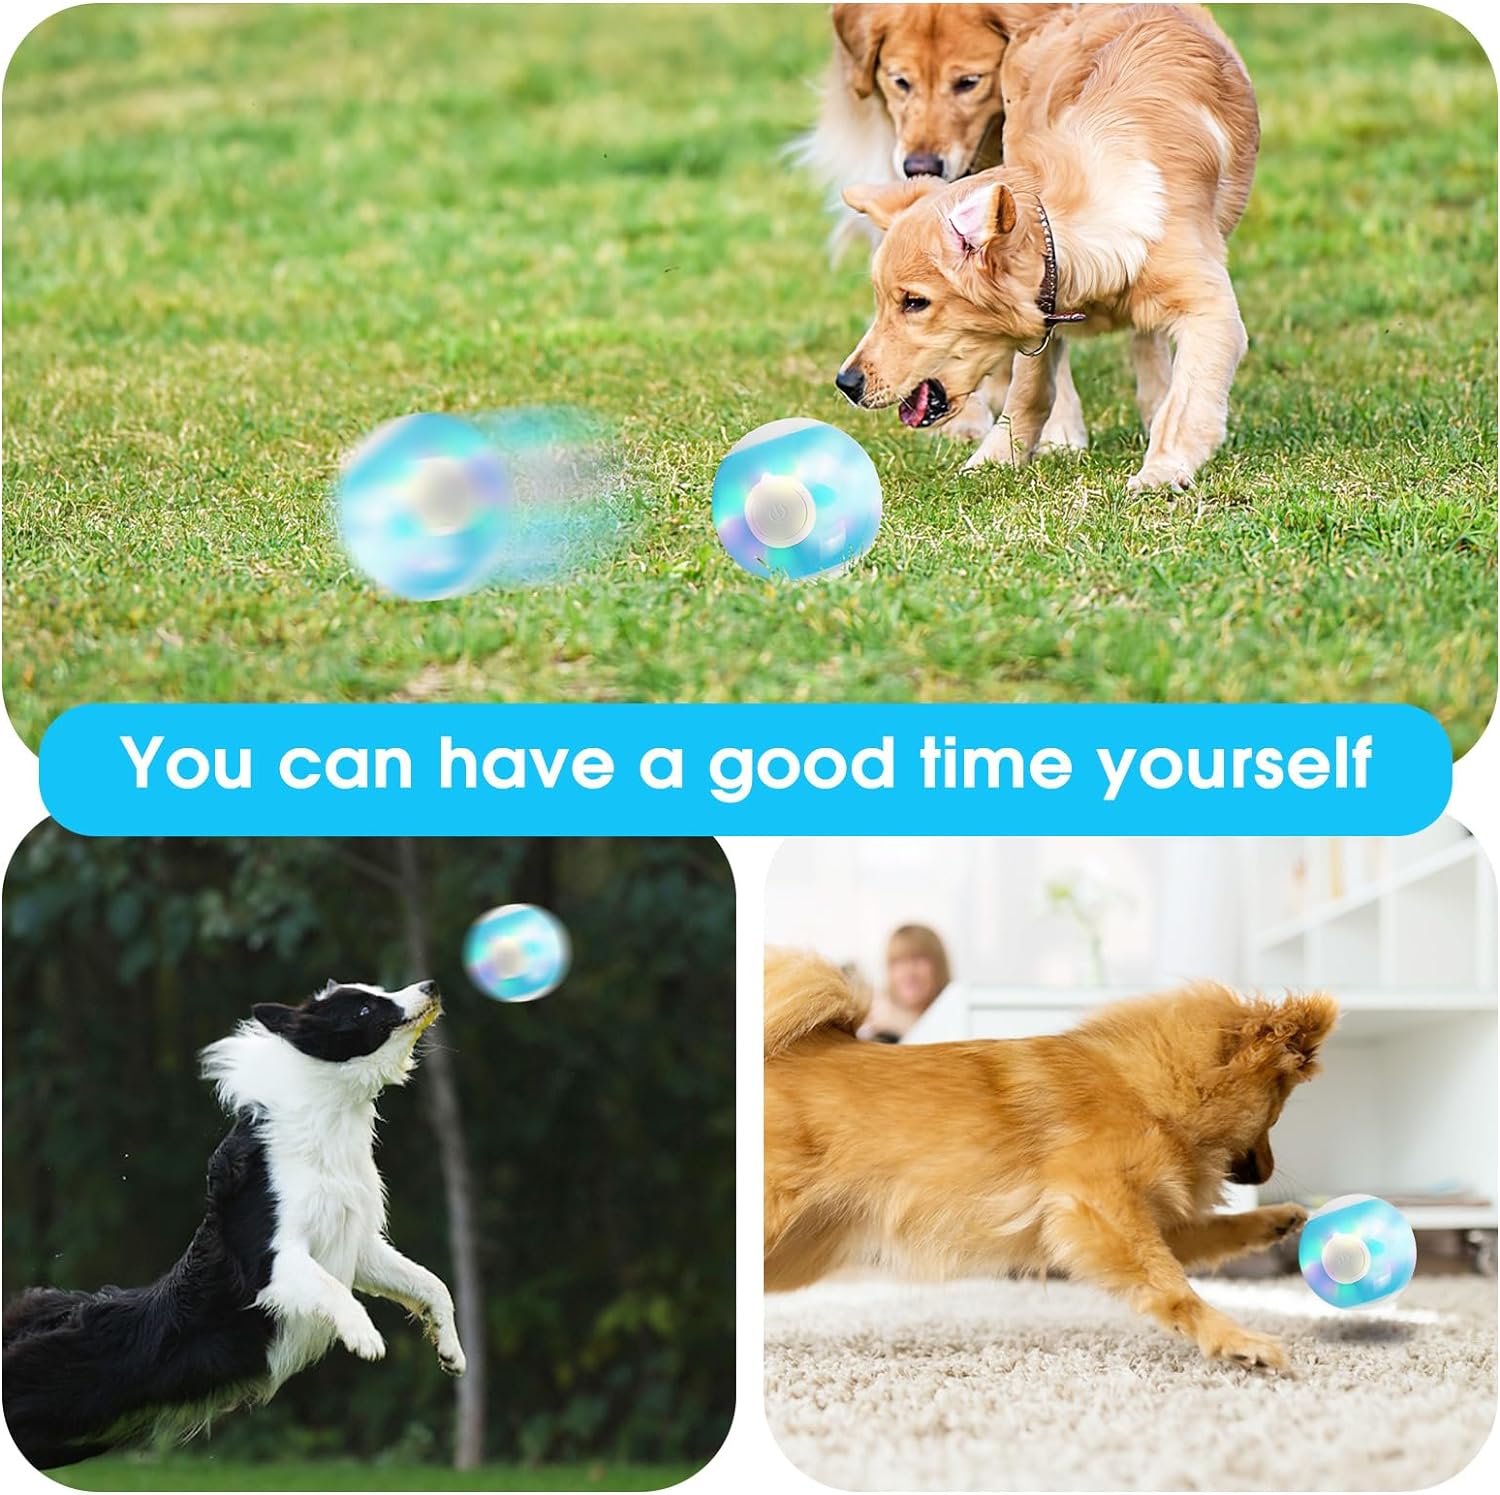 Smart Interactive Ball Dog, Interactive Pet Dog Toys Ball